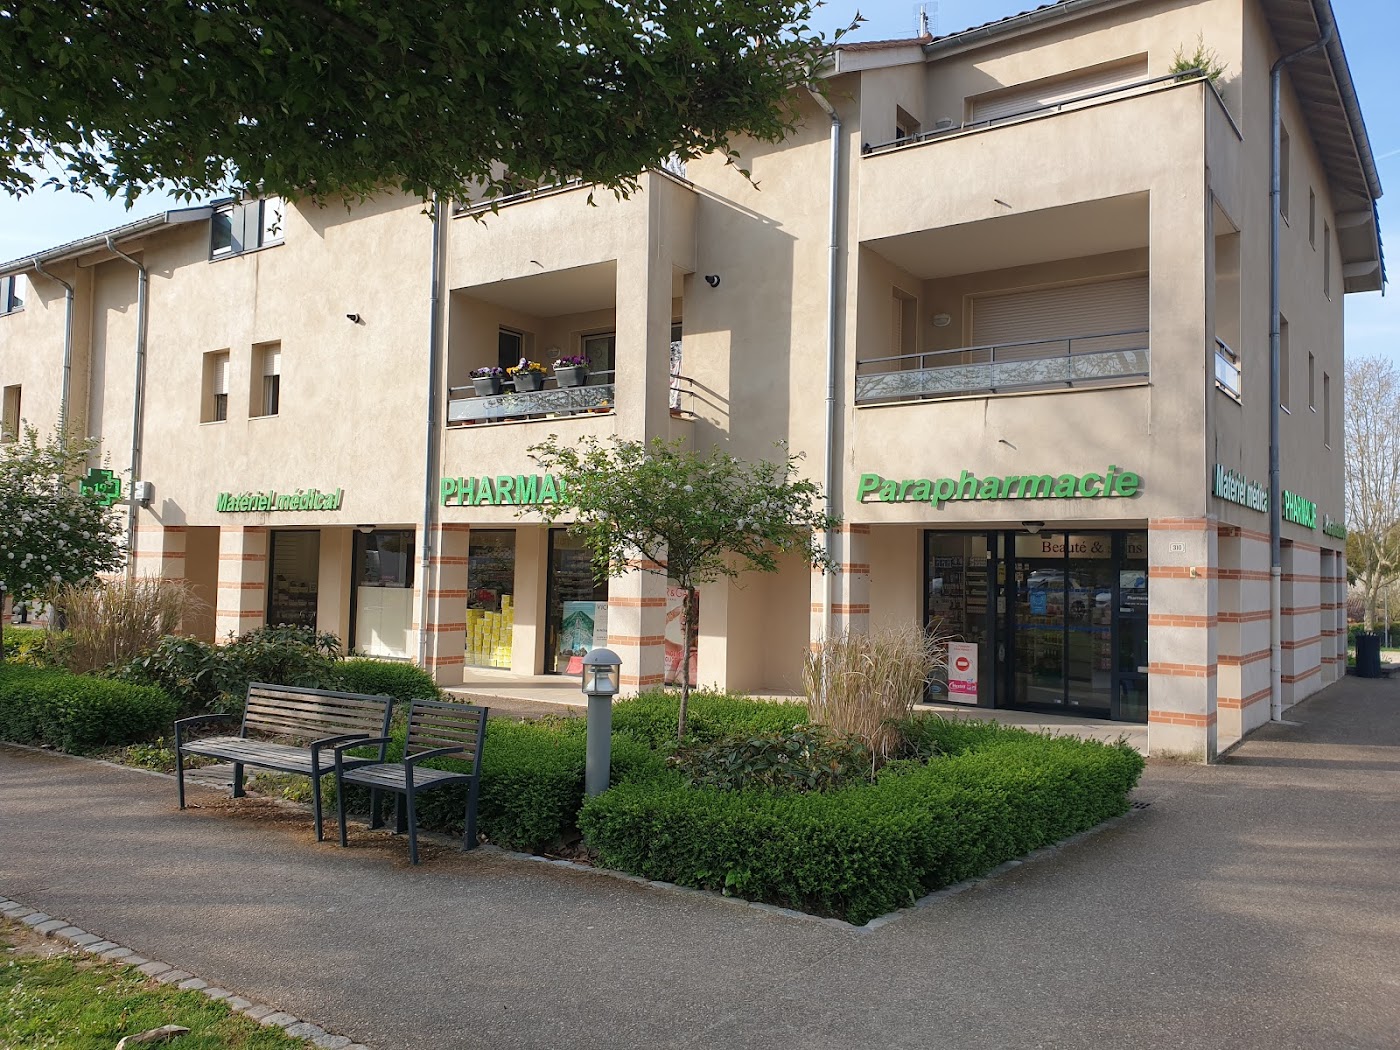 Pharmacie d'Ars et Dombes